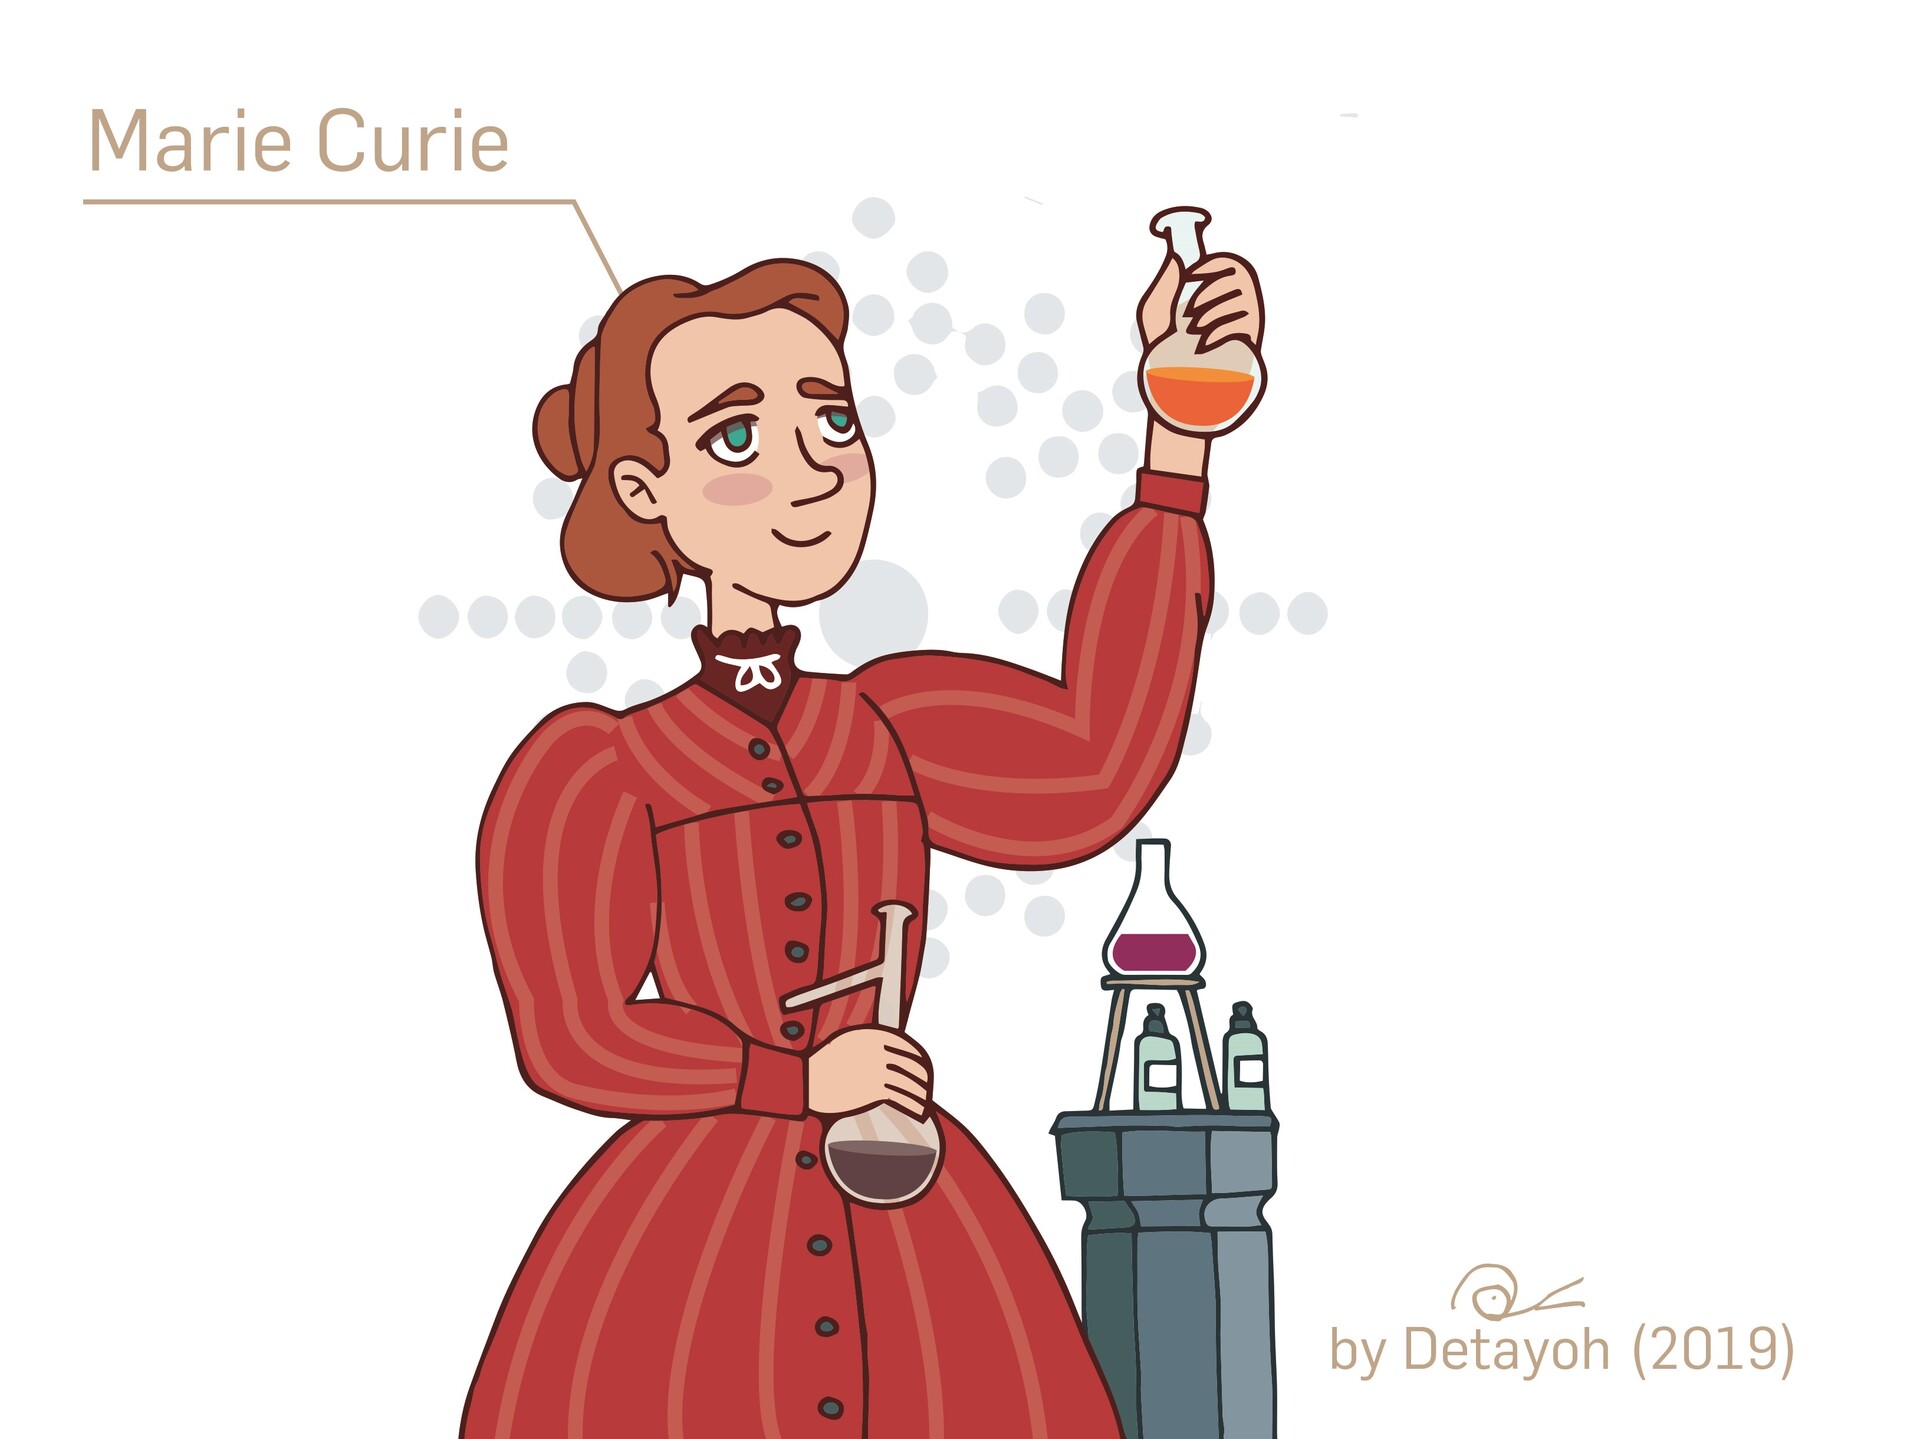 ArtStation - Marie Curie